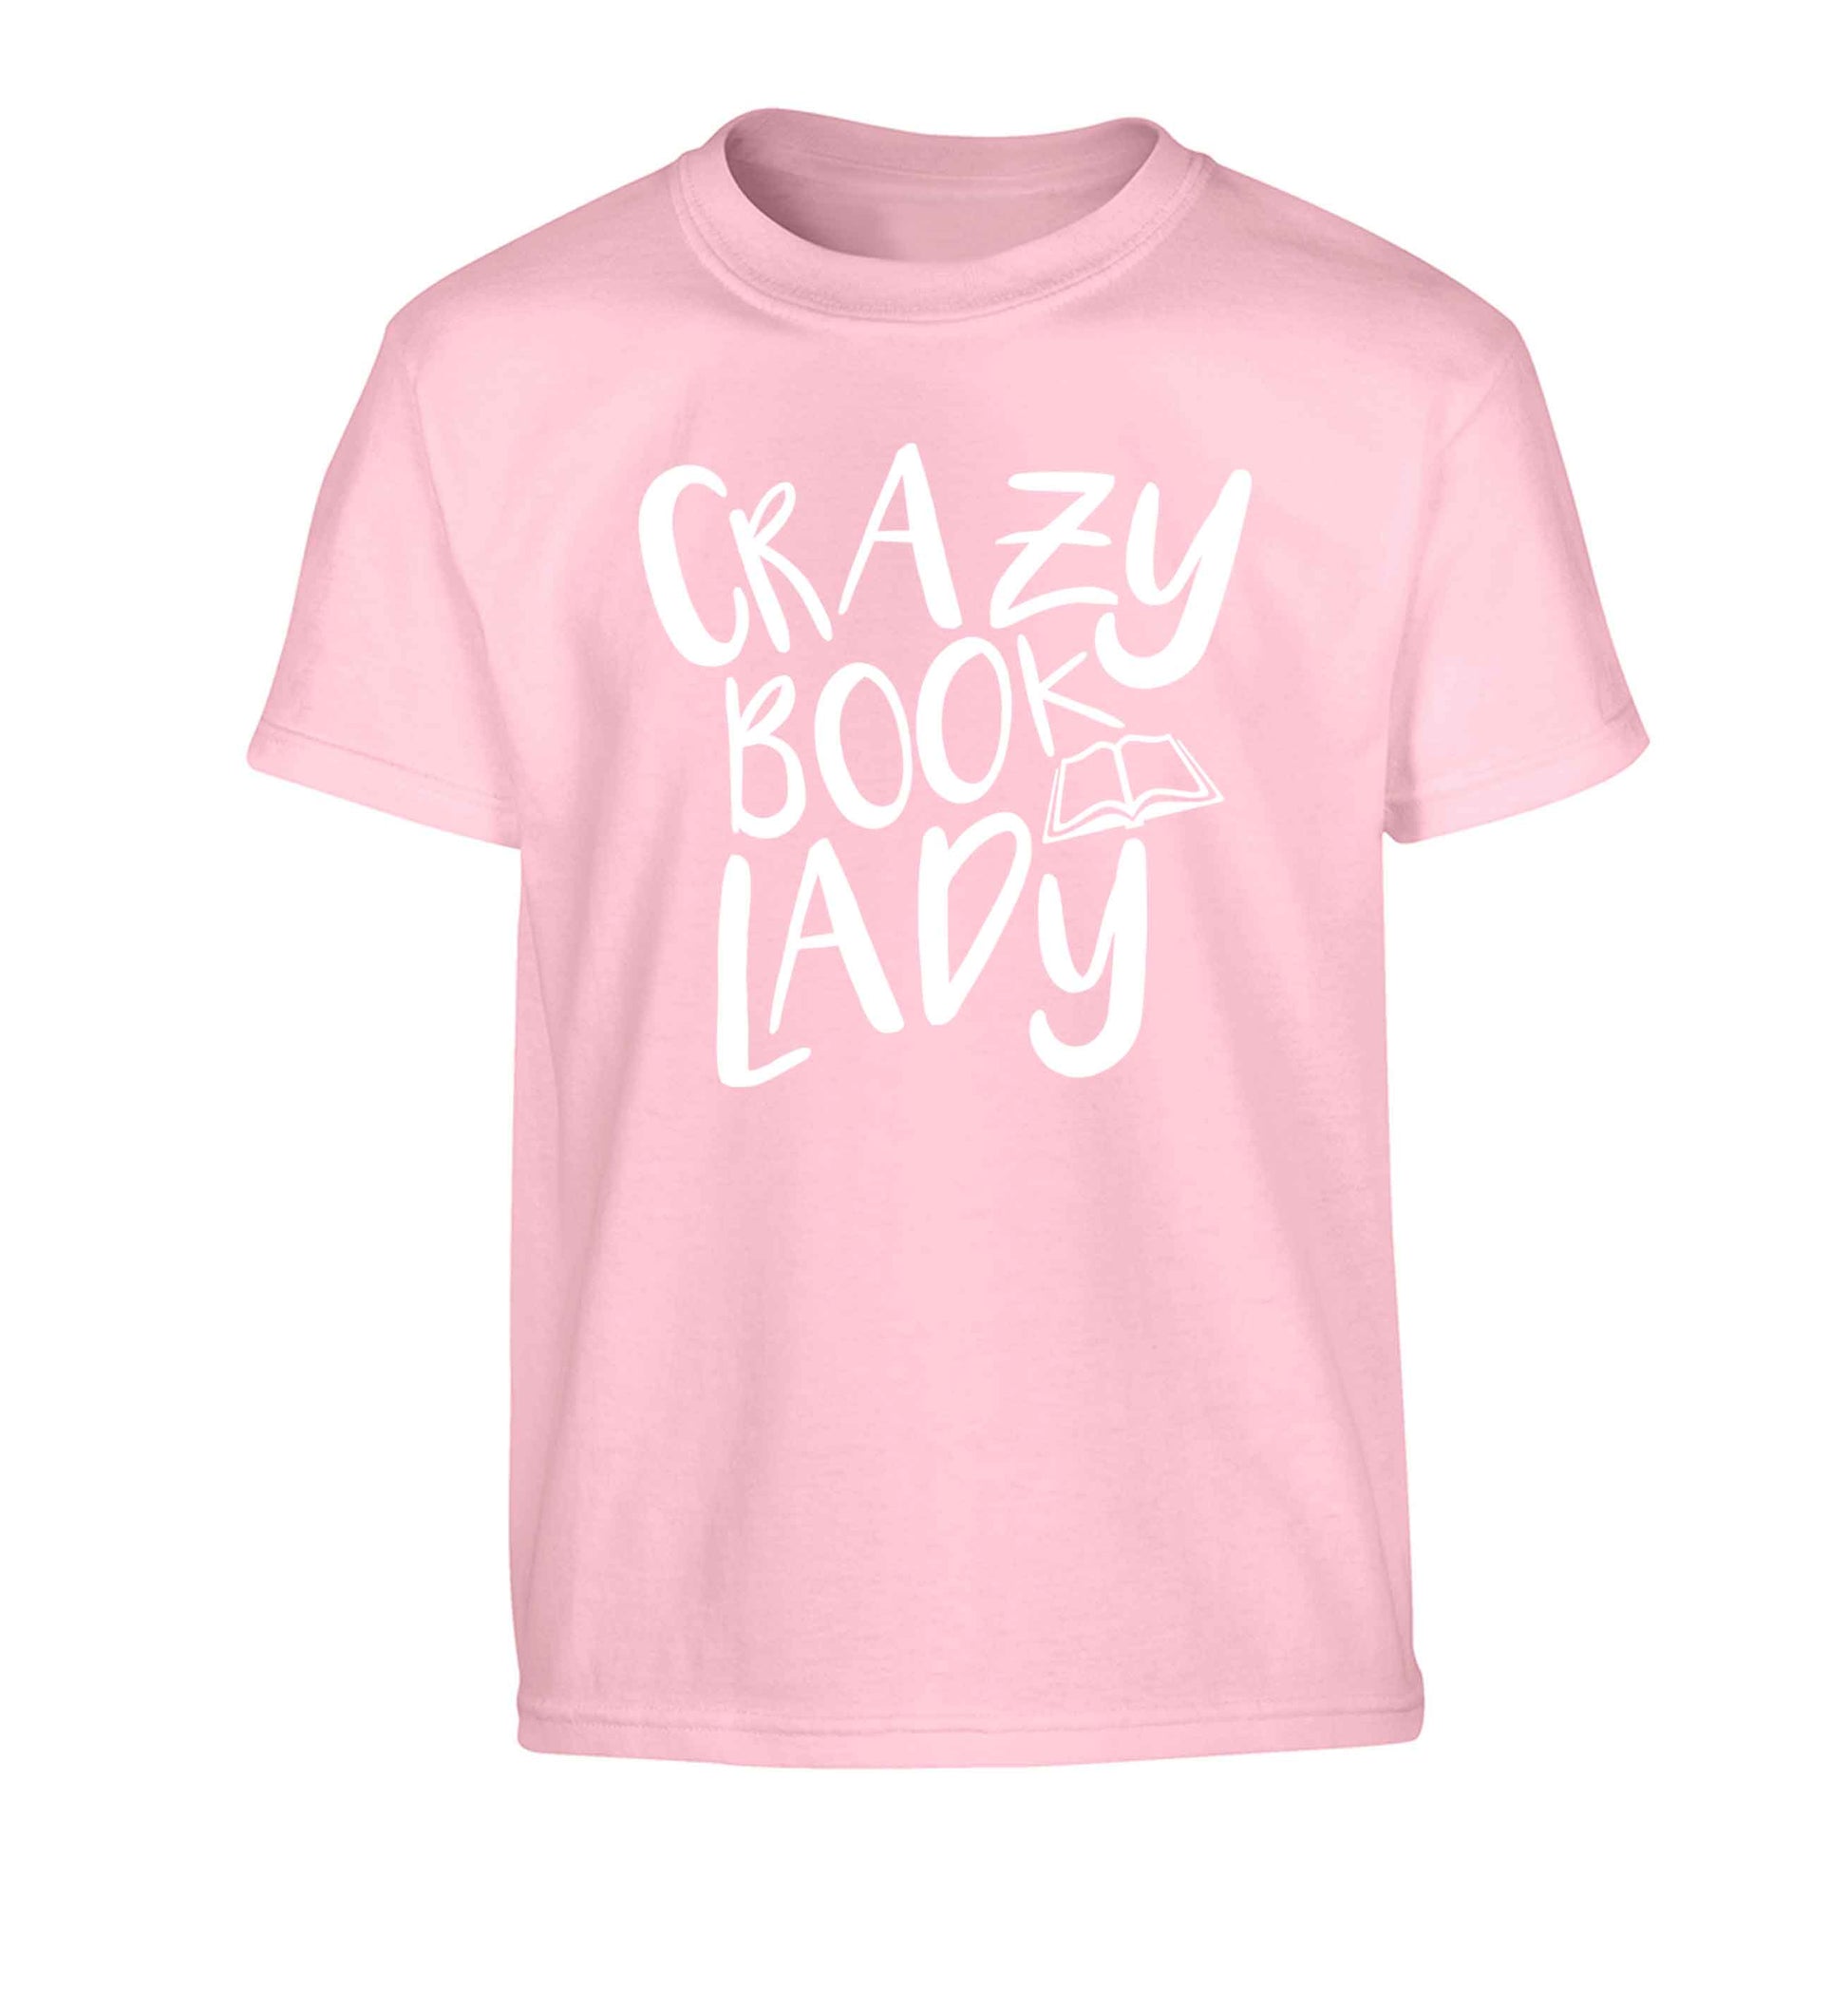 Crazy book lady Children's light pink Tshirt 12-13 Years